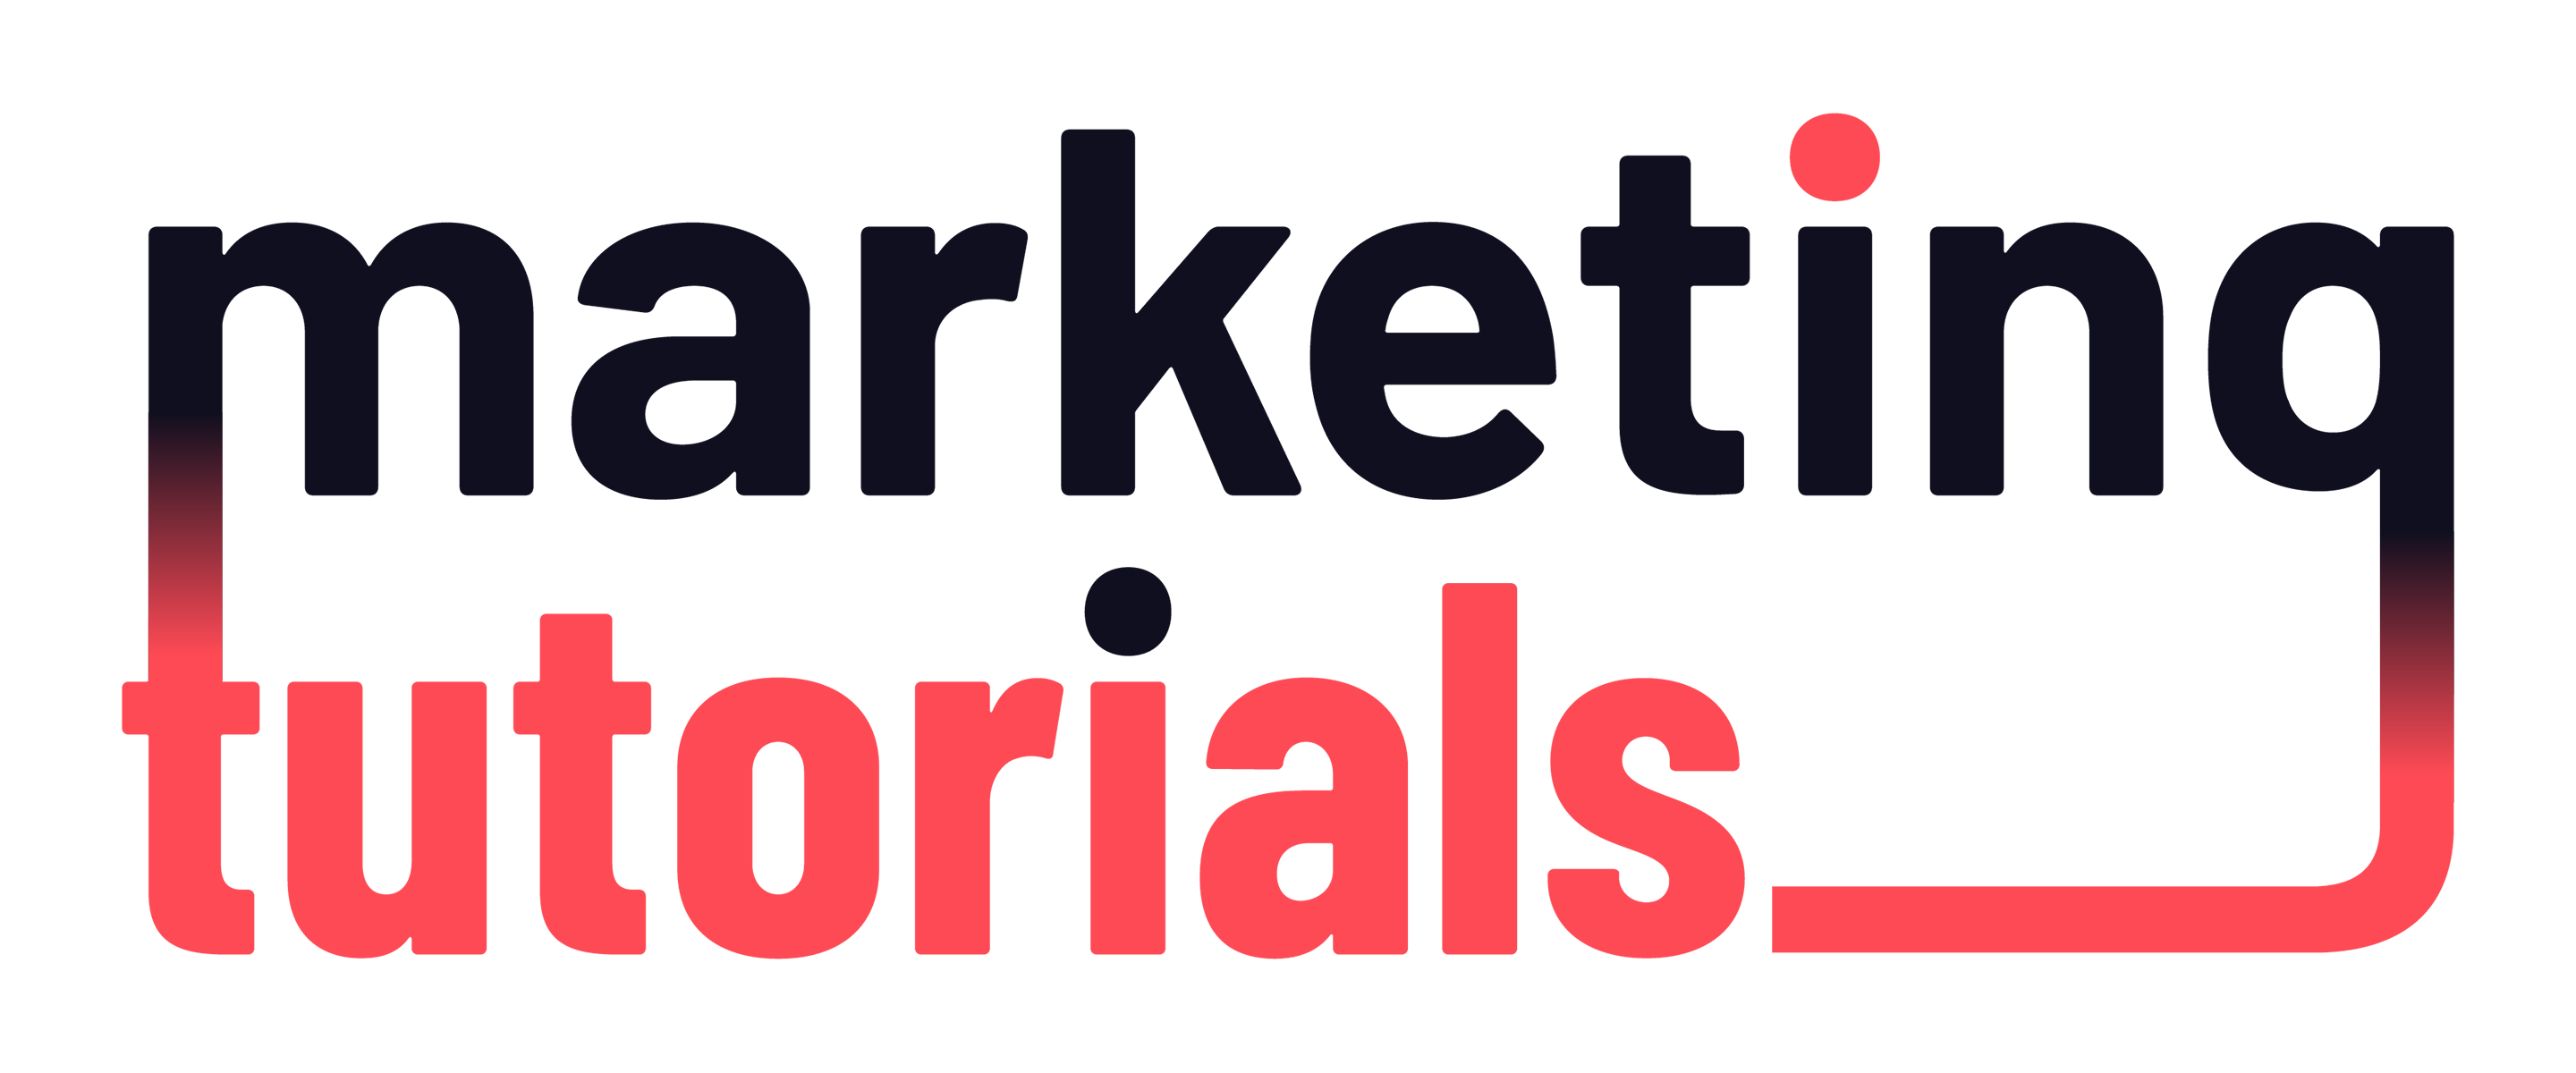 Free Online Marketing Courses | Marketing Tutorials